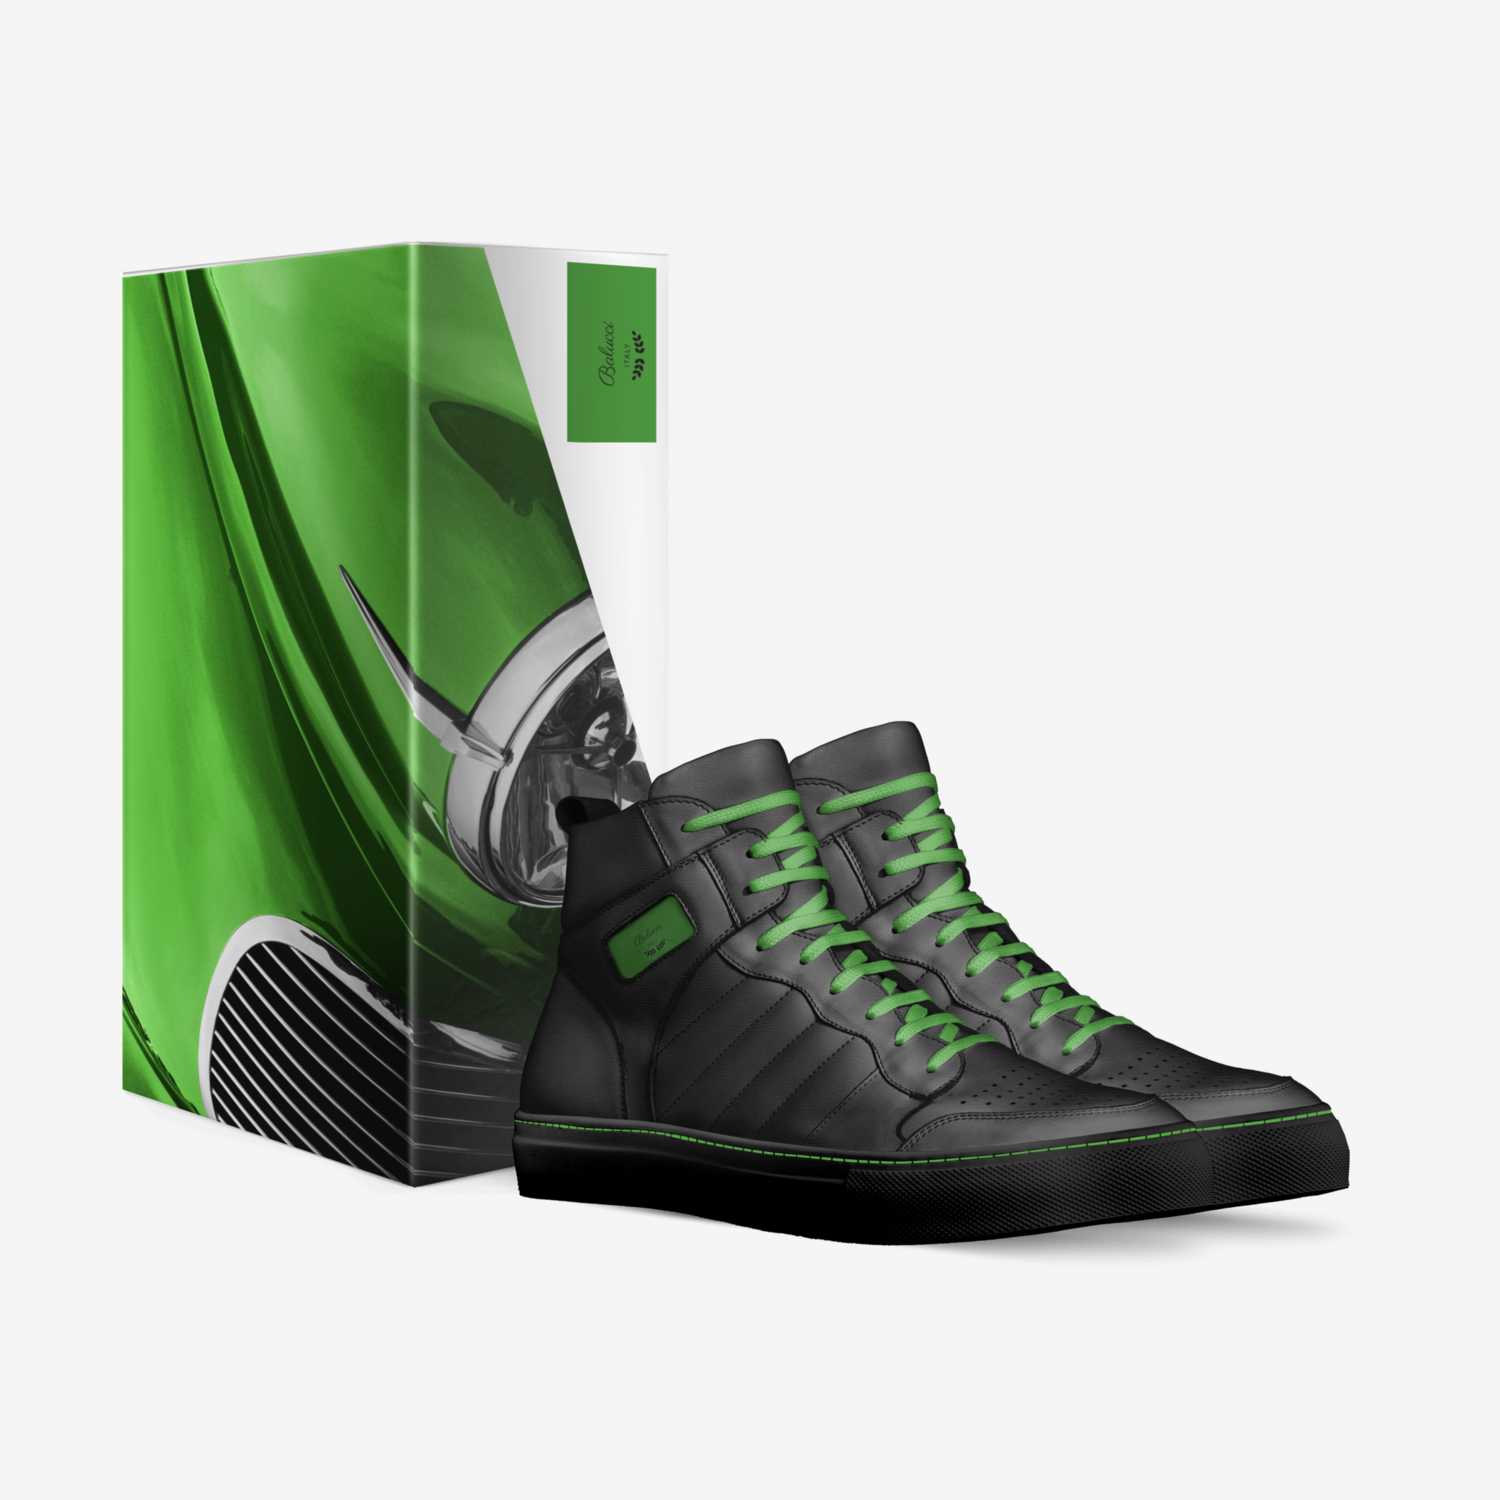 Balucci custom made in Italy shoes by Hanief Balkaran | Box view